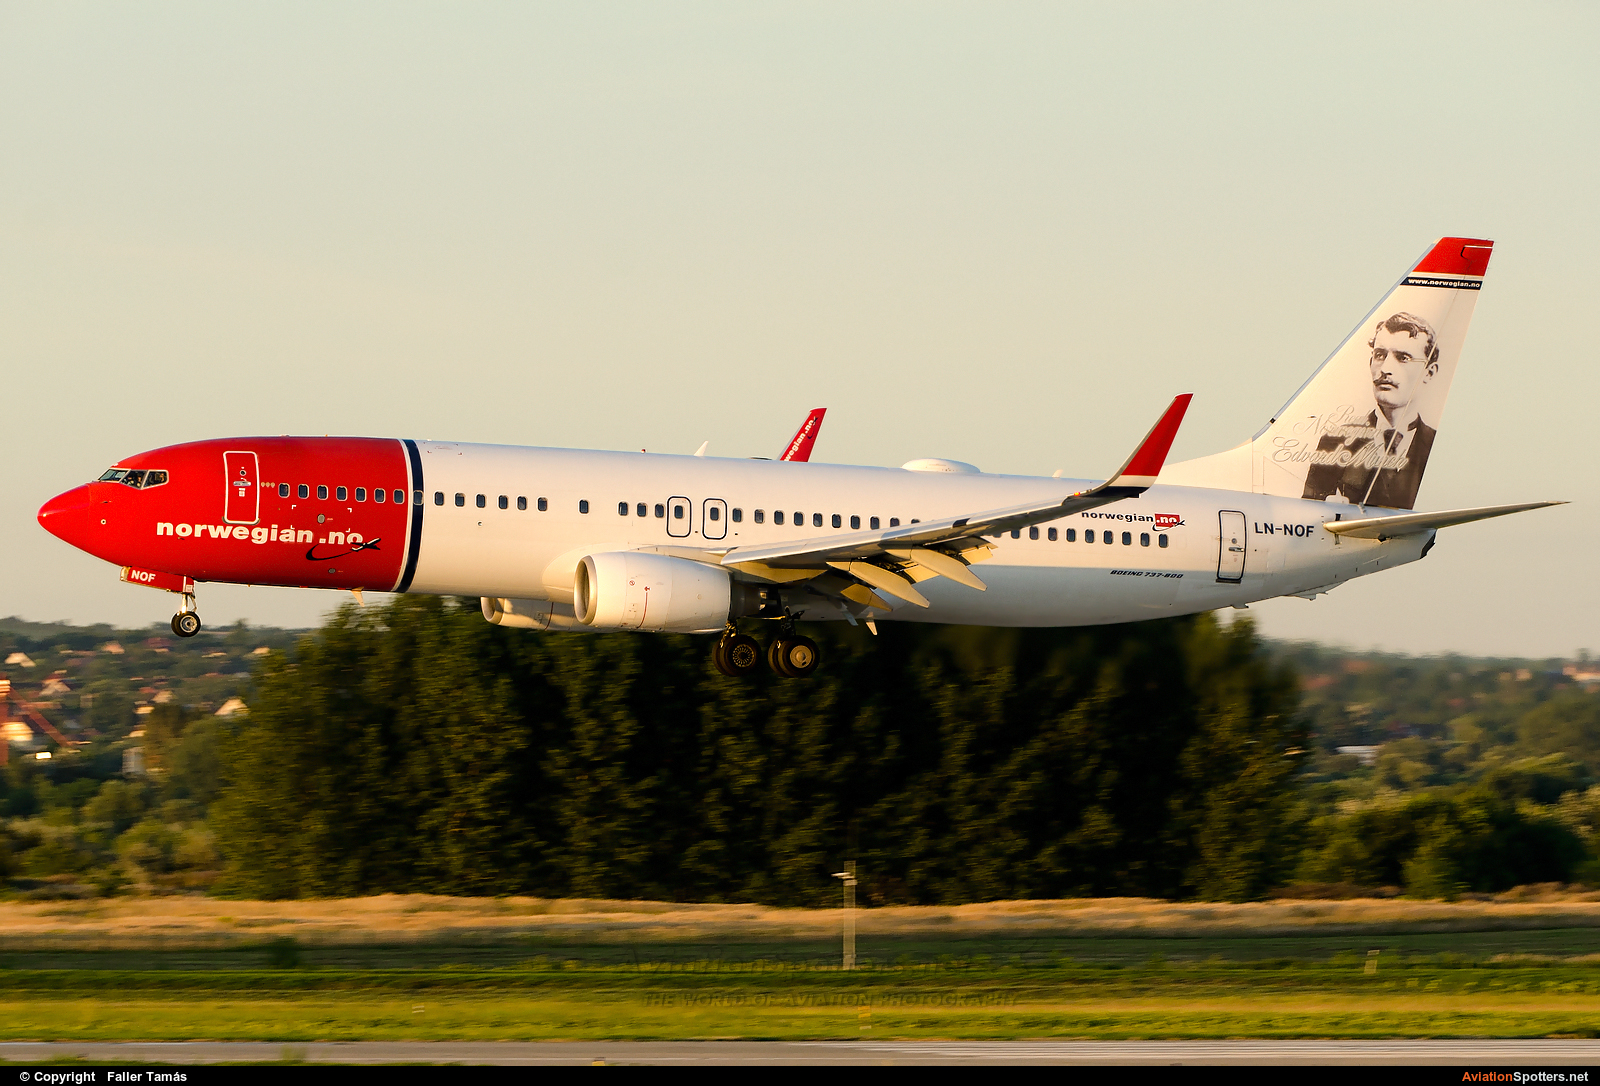 Norwegian Air Shuttle  -  737-800  (LN-NOF) By Faller Tamás (fallto78)